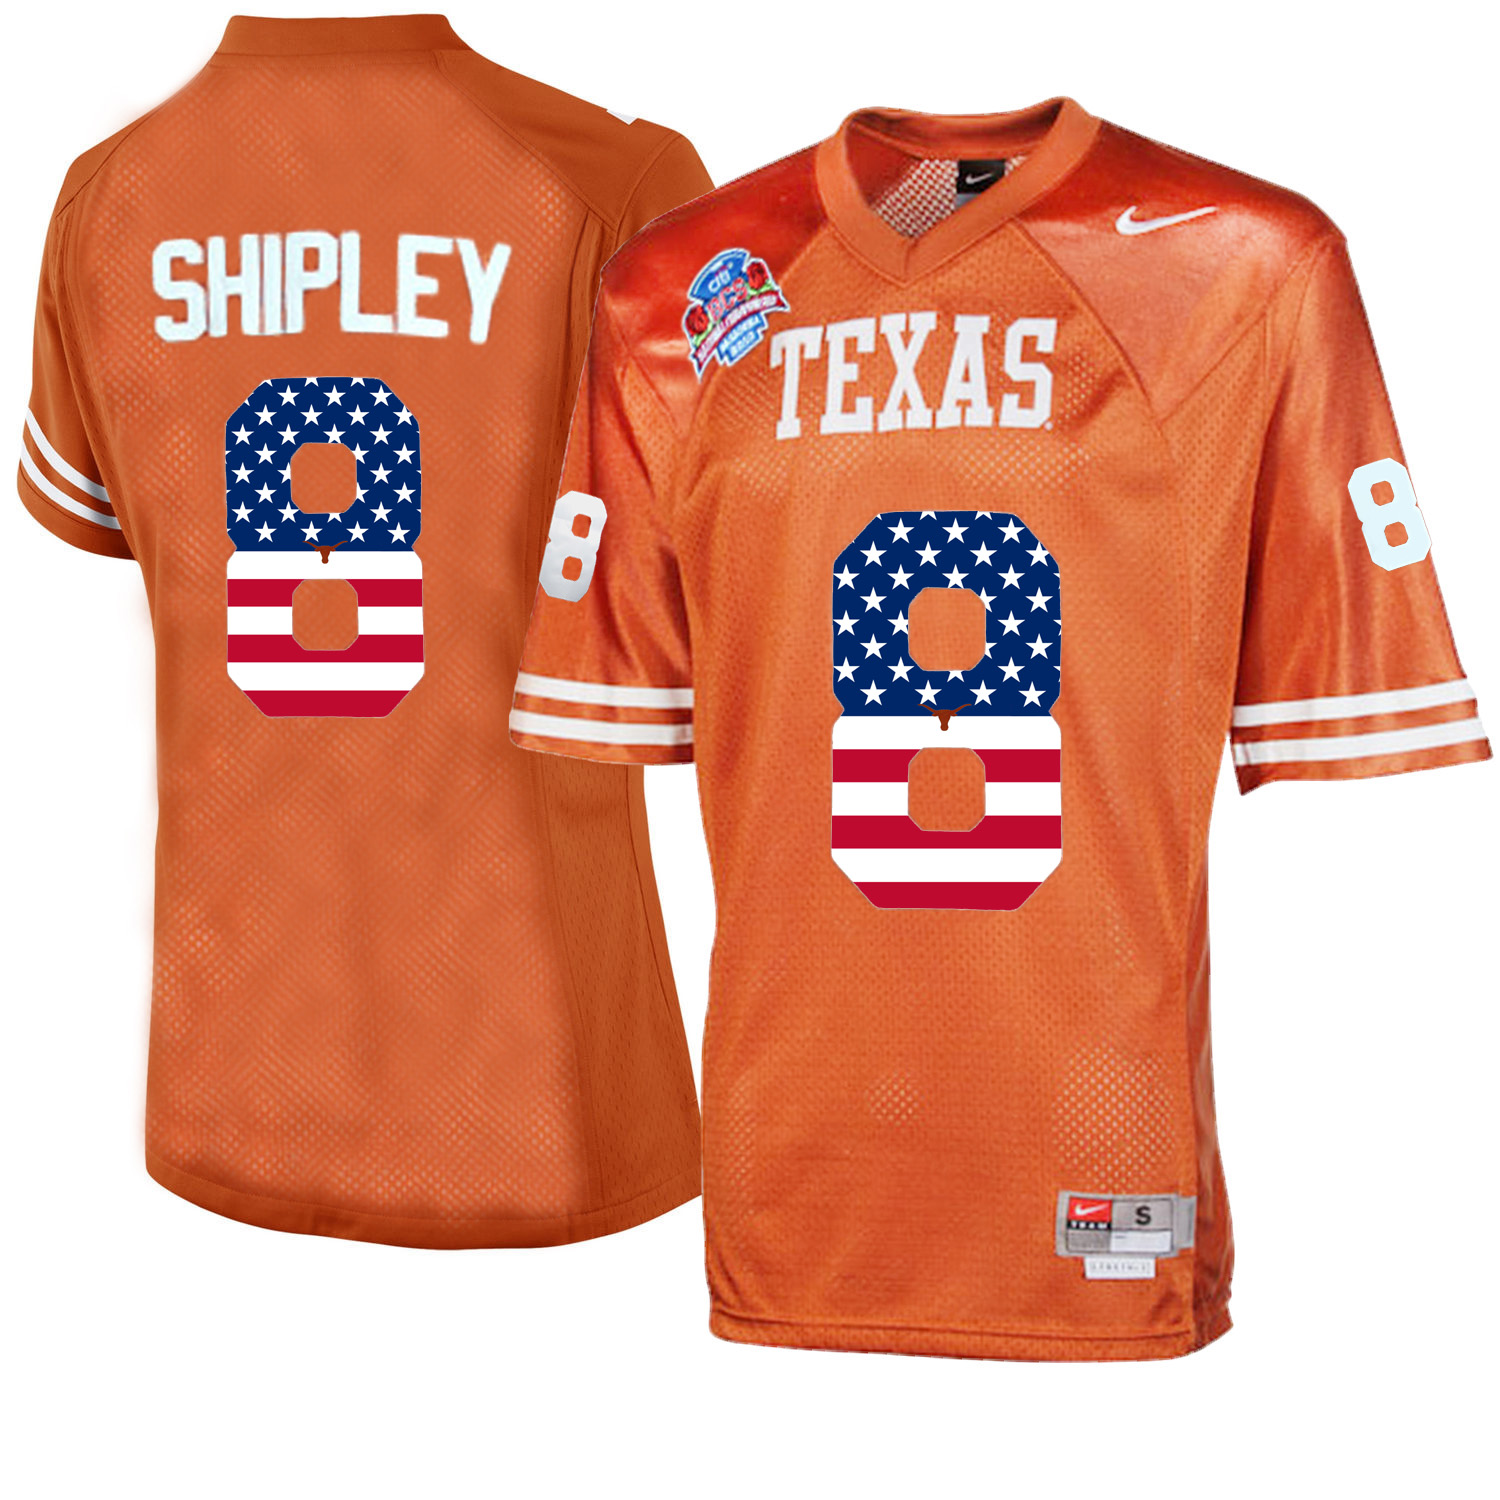 Texas Longhorns 8 Jordan Shipley Orange College Football Throwback Jersey